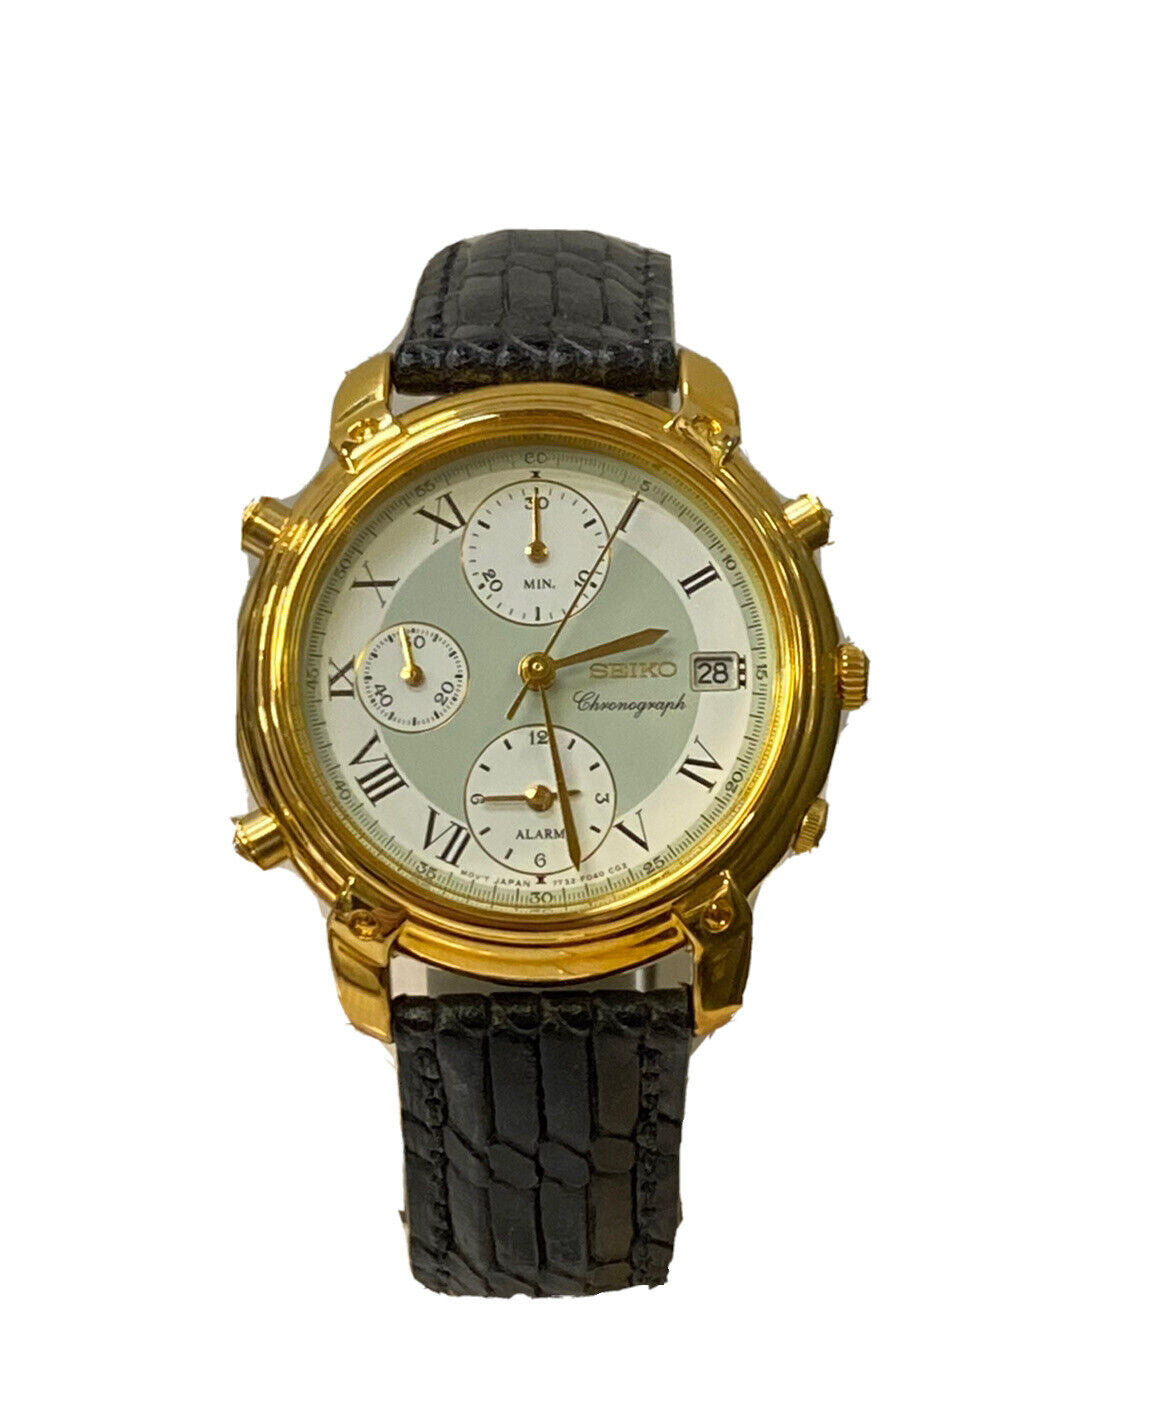 Seiko Alarm chronograph Watch New With Tags SDW710